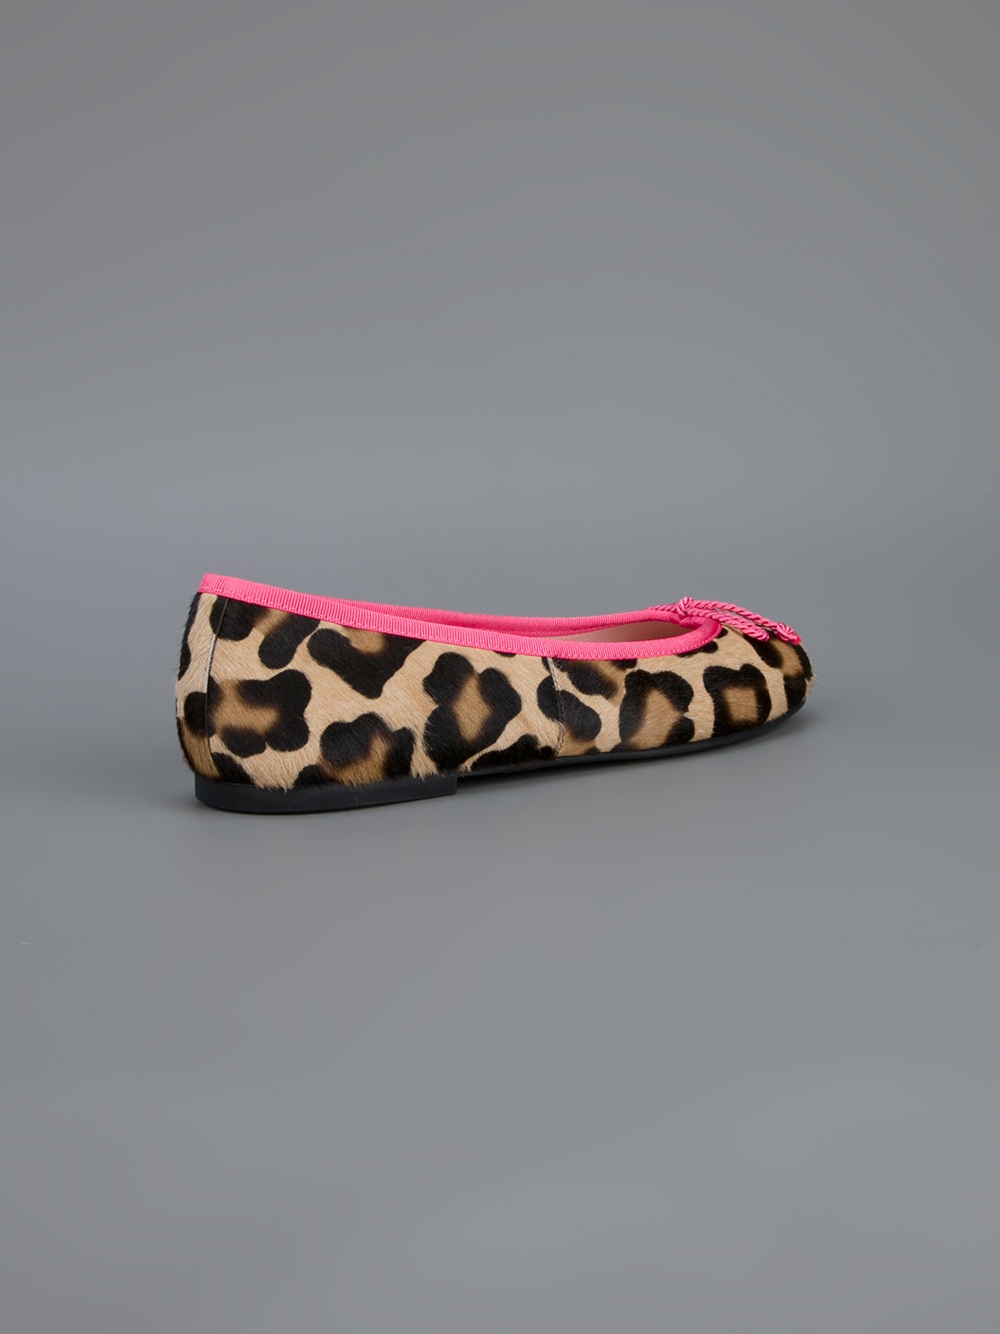 Etablering Praktisk Larry Belmont Pretty Ballerinas Leopard Print Ballerina in Pink - Lyst